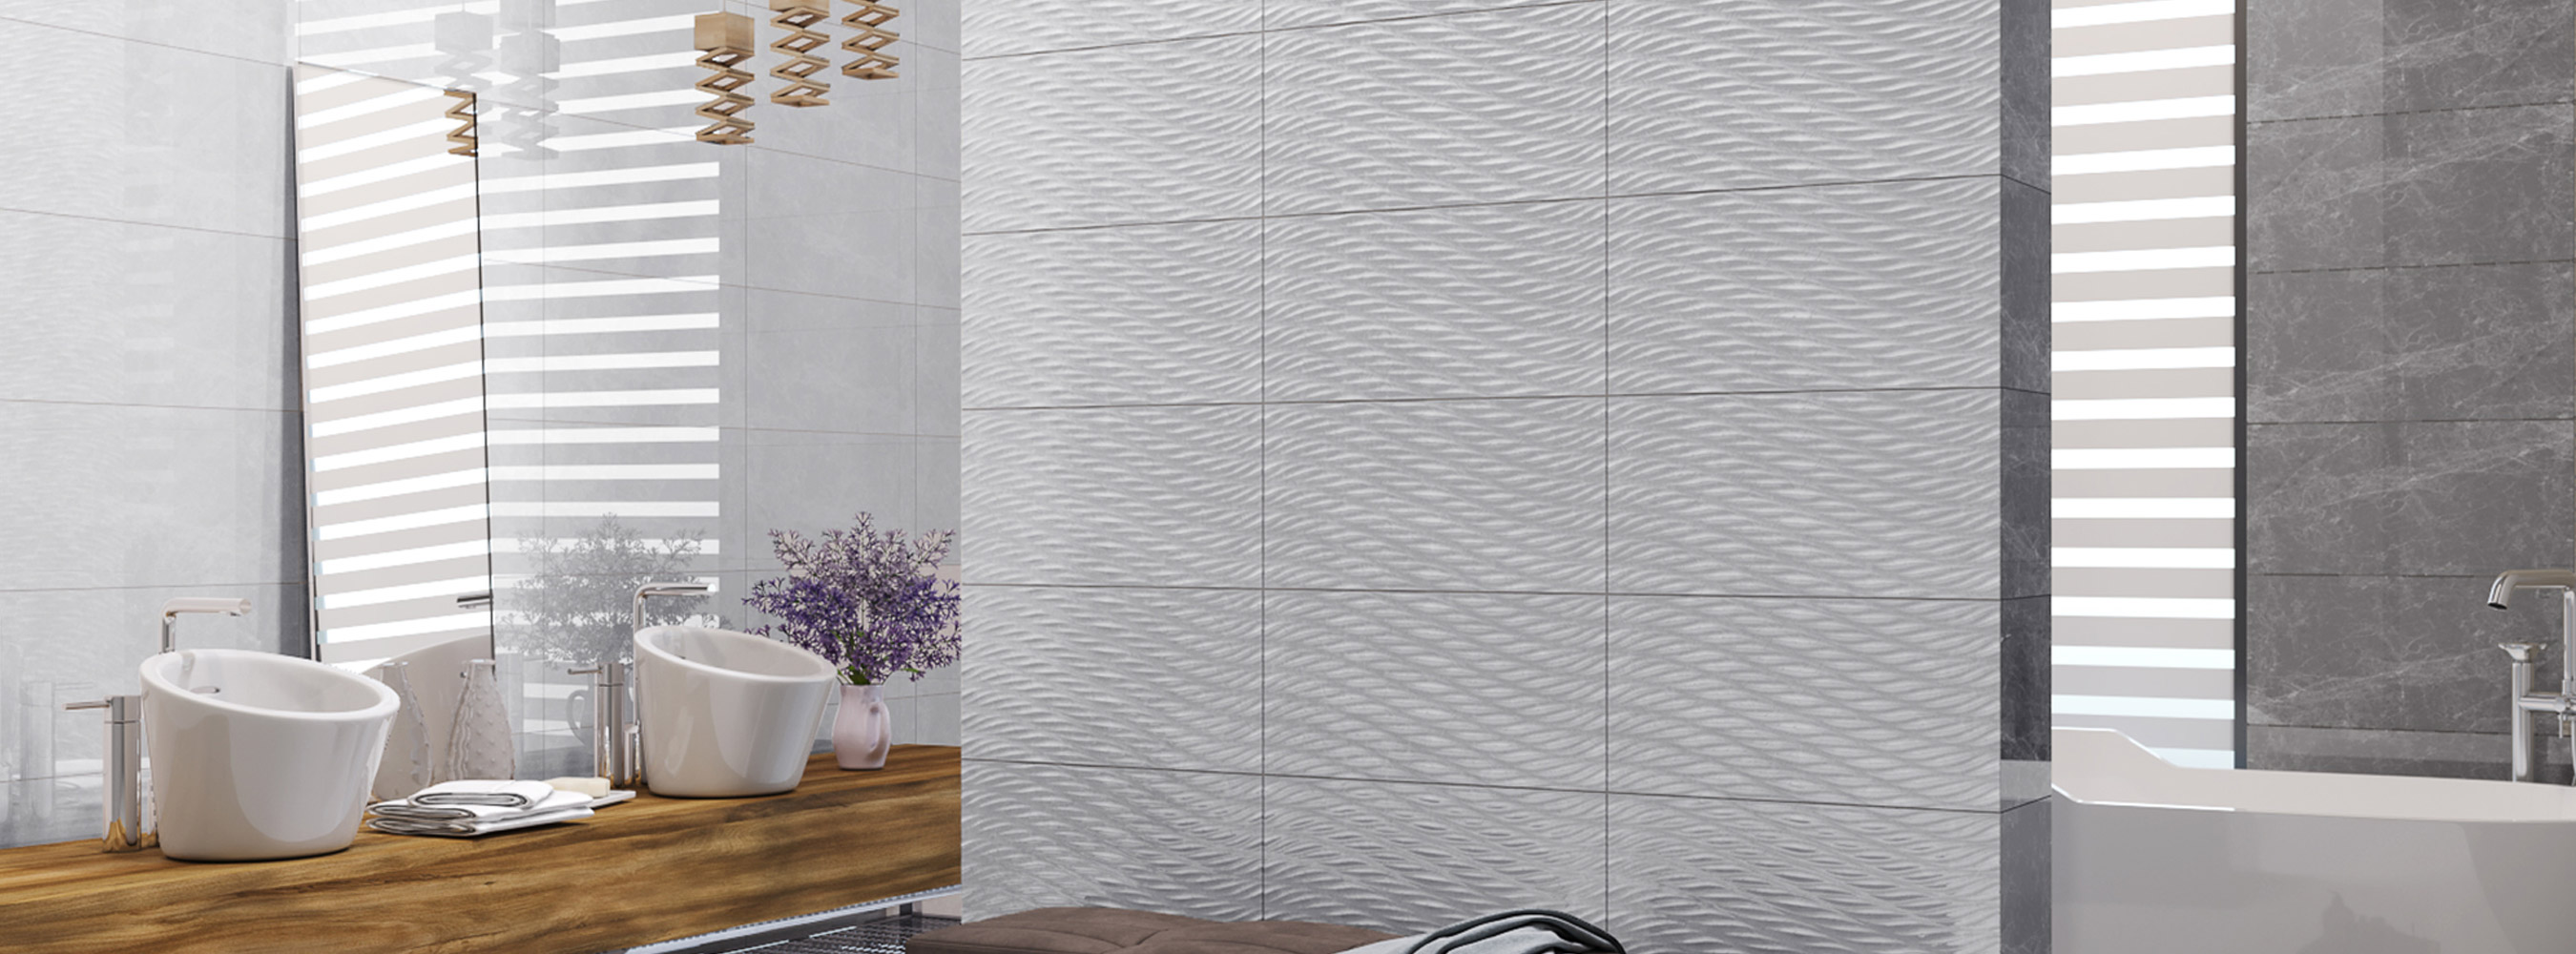 Elegance wall tile